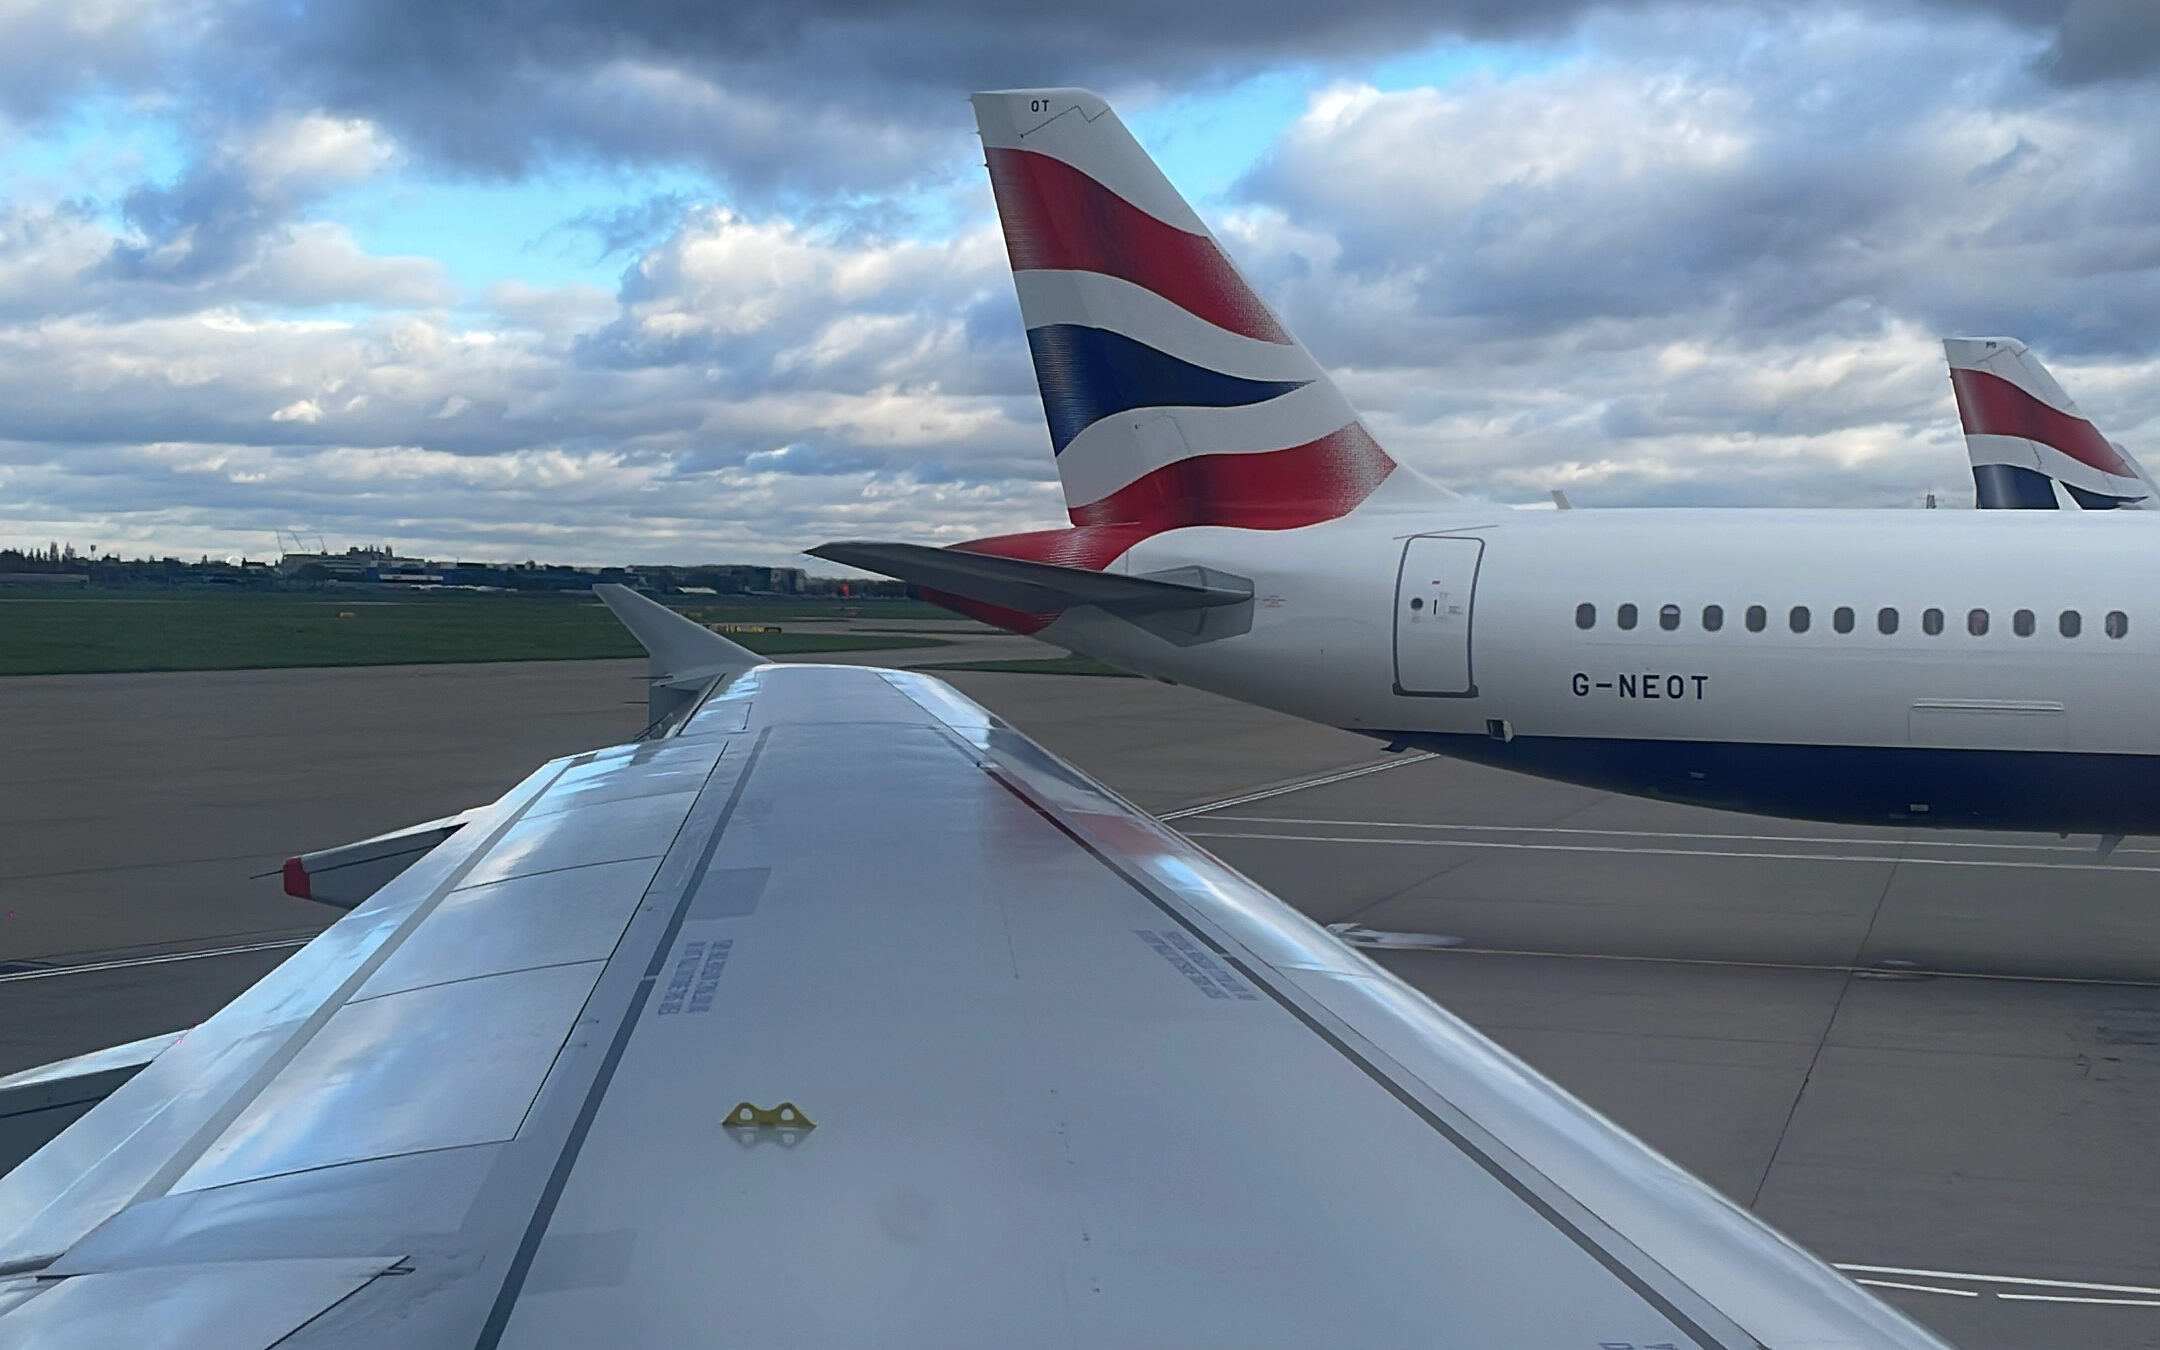 British Airways Plane on pushback